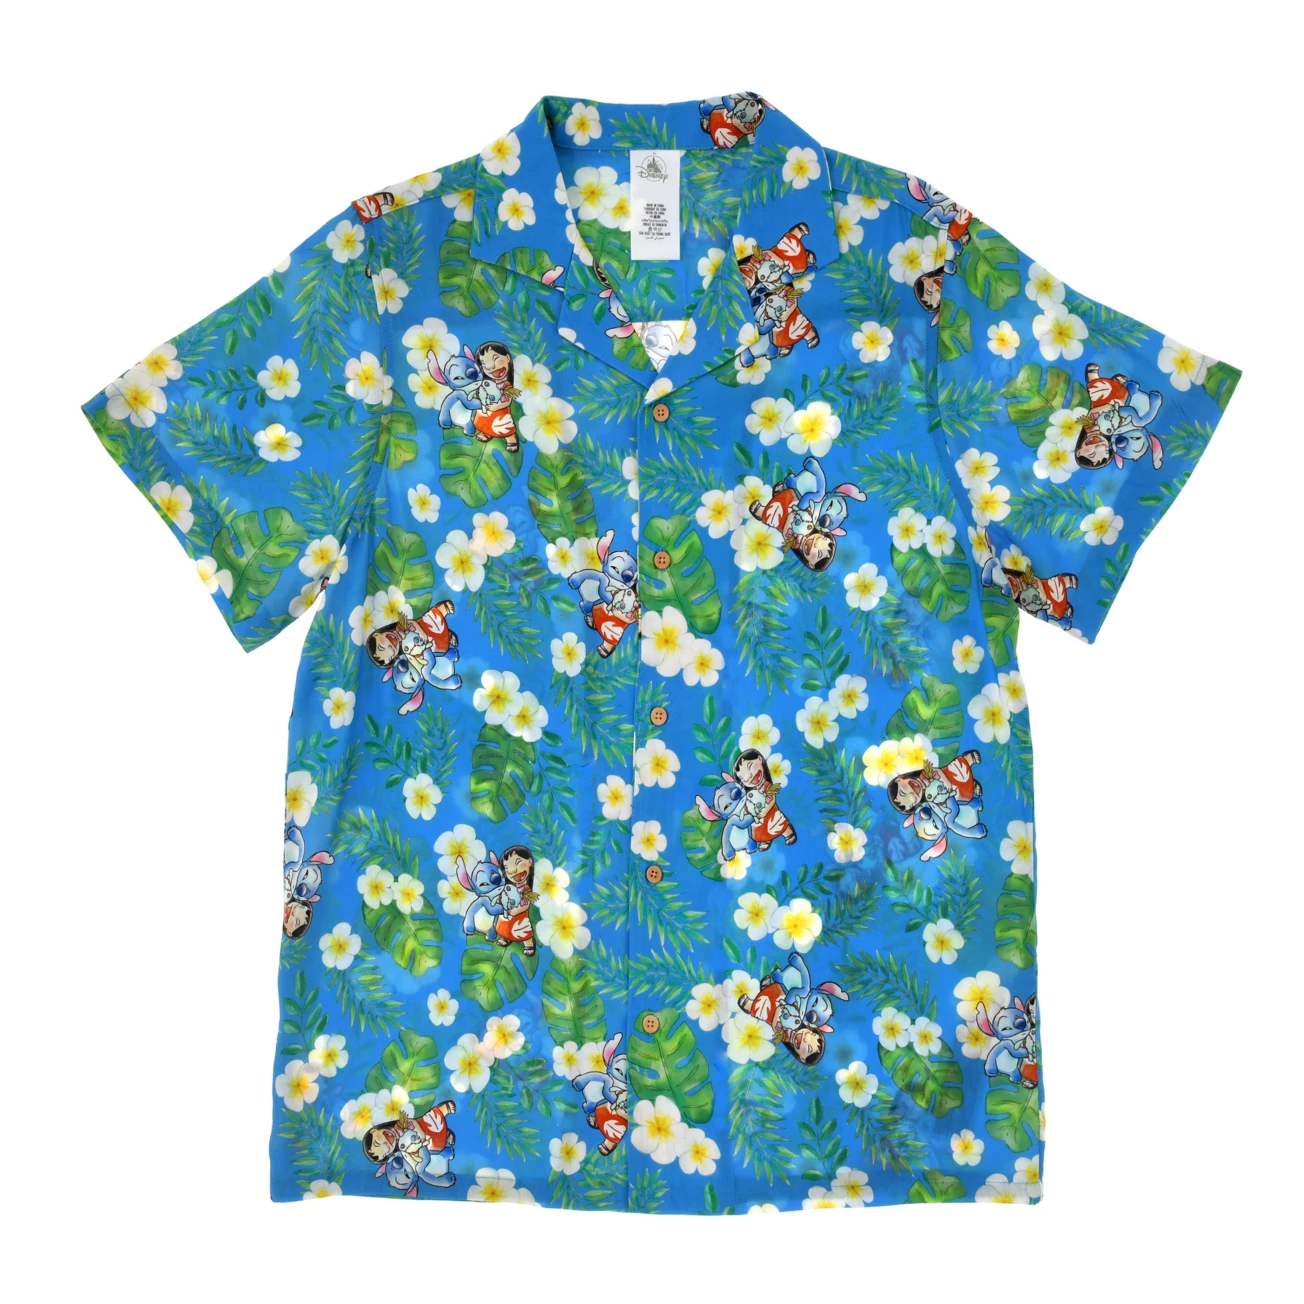 ShopDisney Japan - STITCH 20 YEARS - shirts